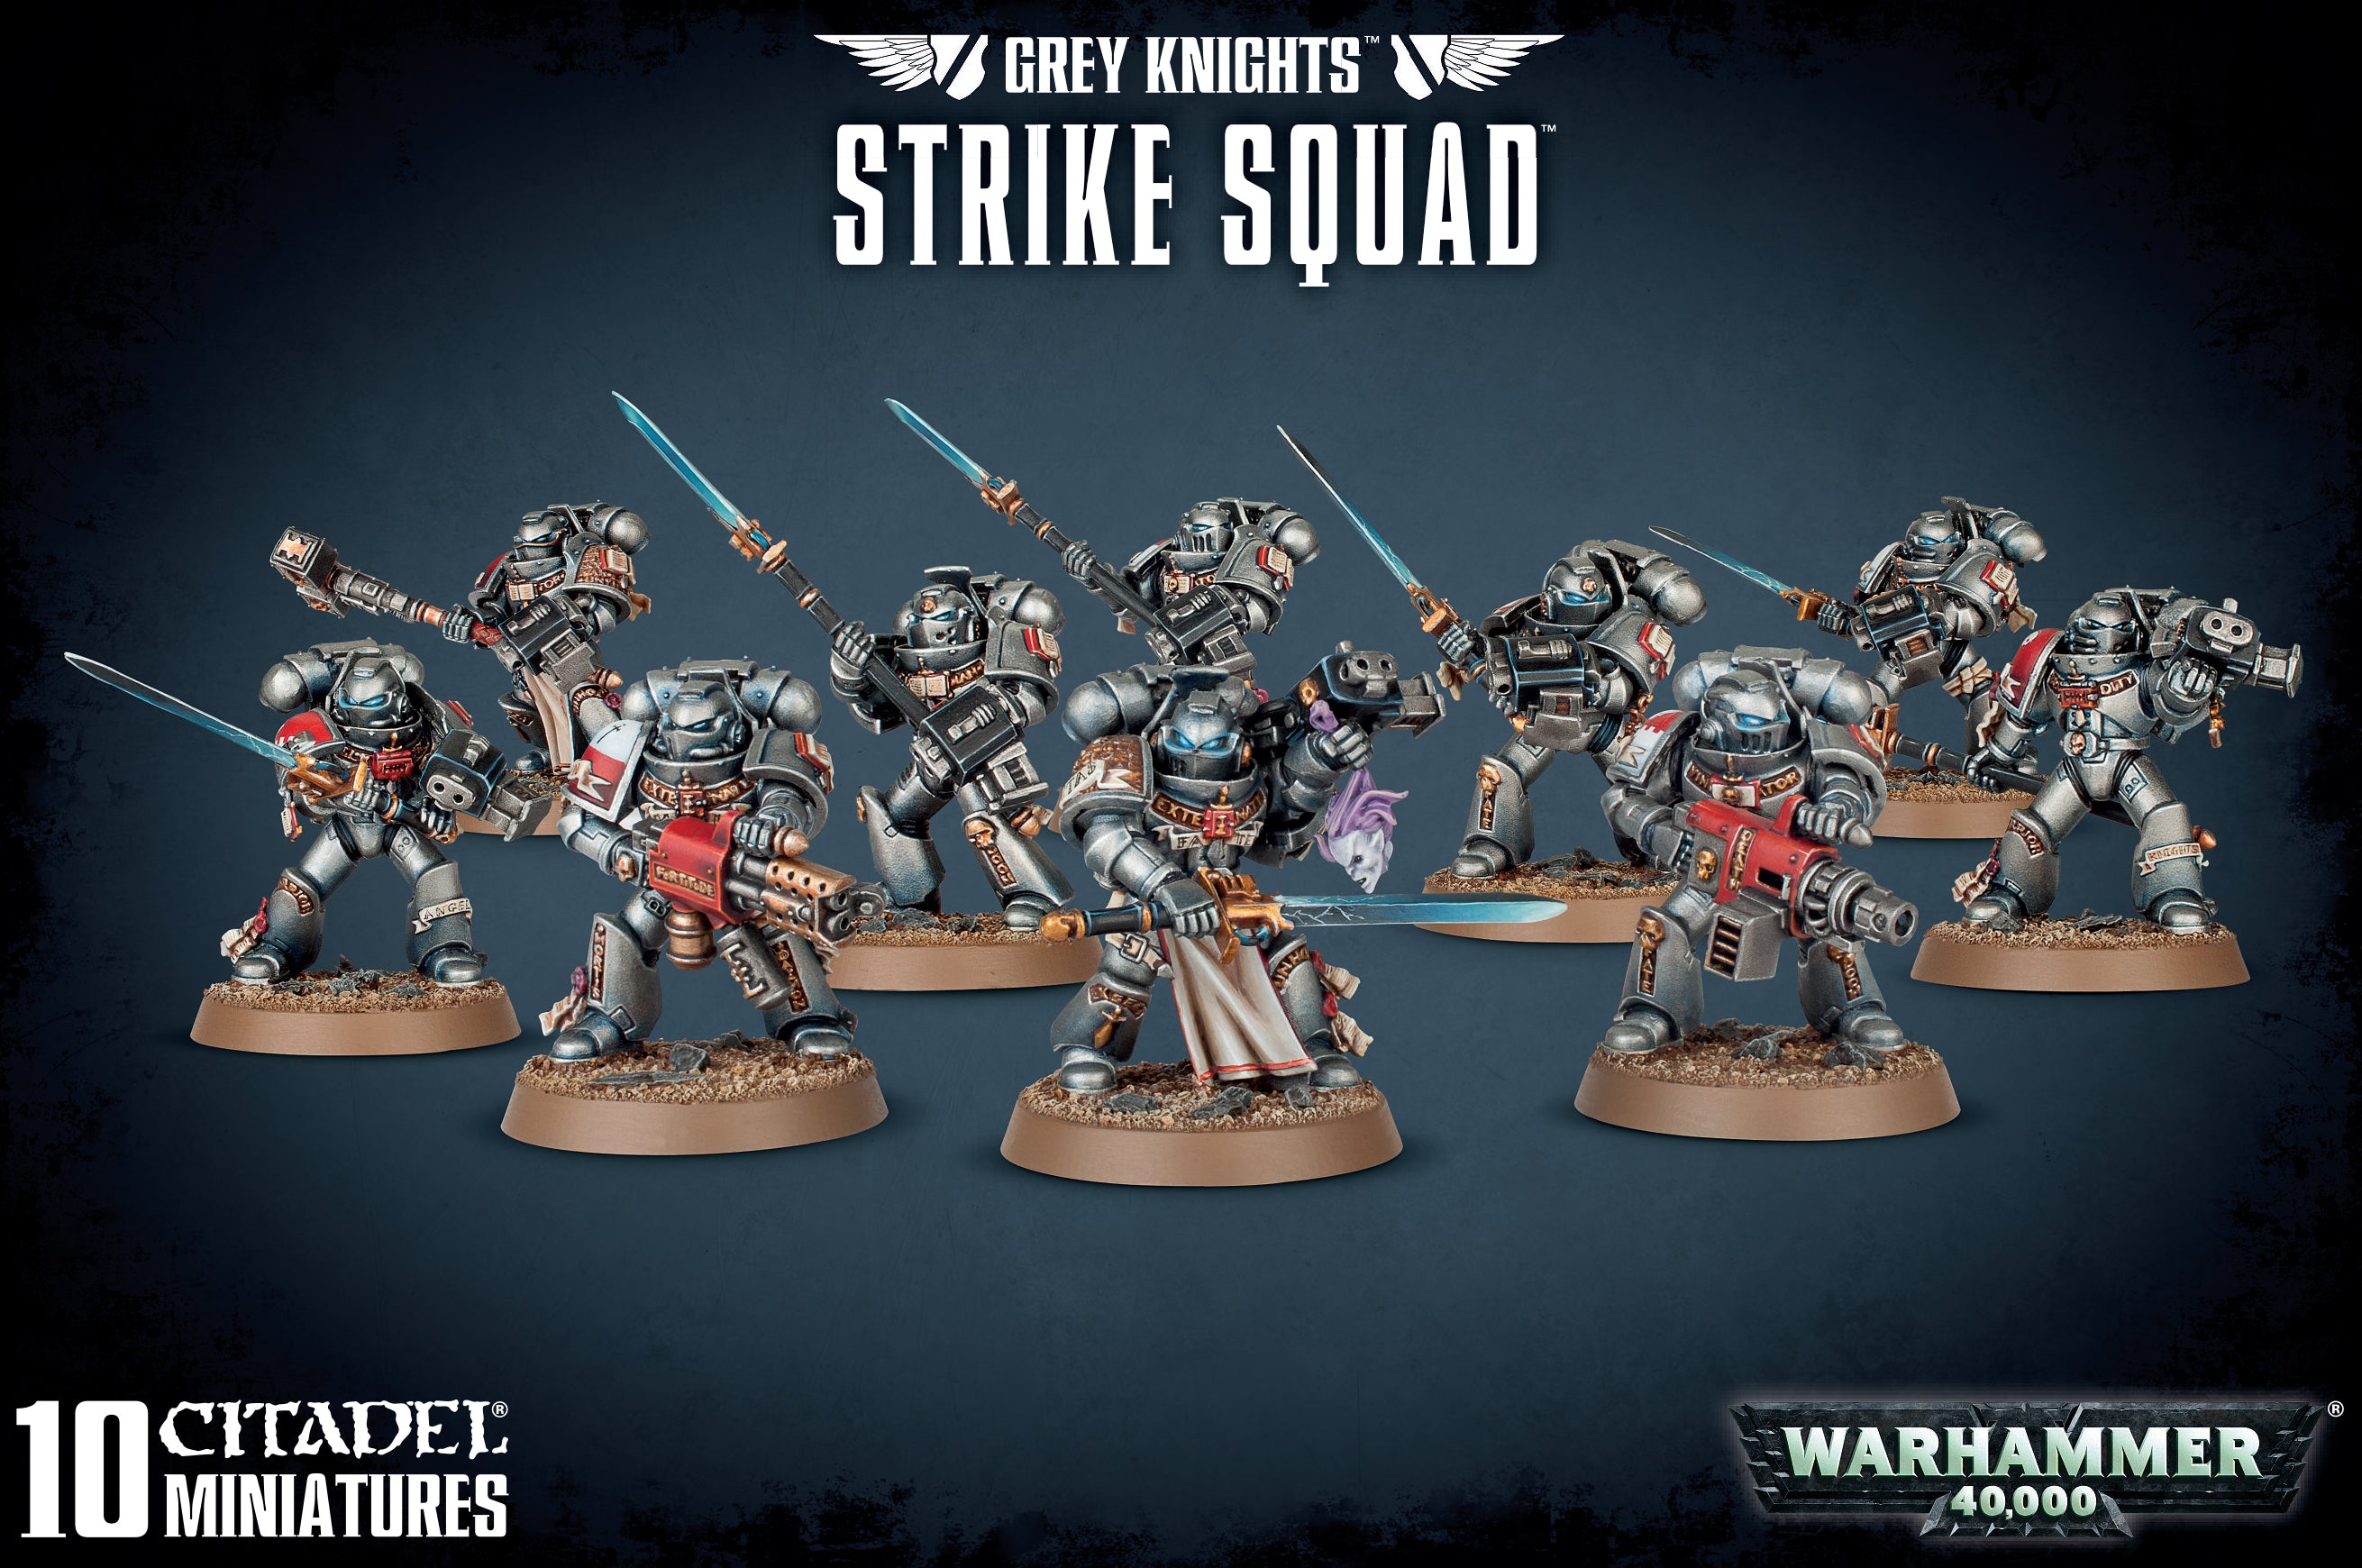 Warhammer 40k: Grey Knights Strike Squad - Bards & Cards